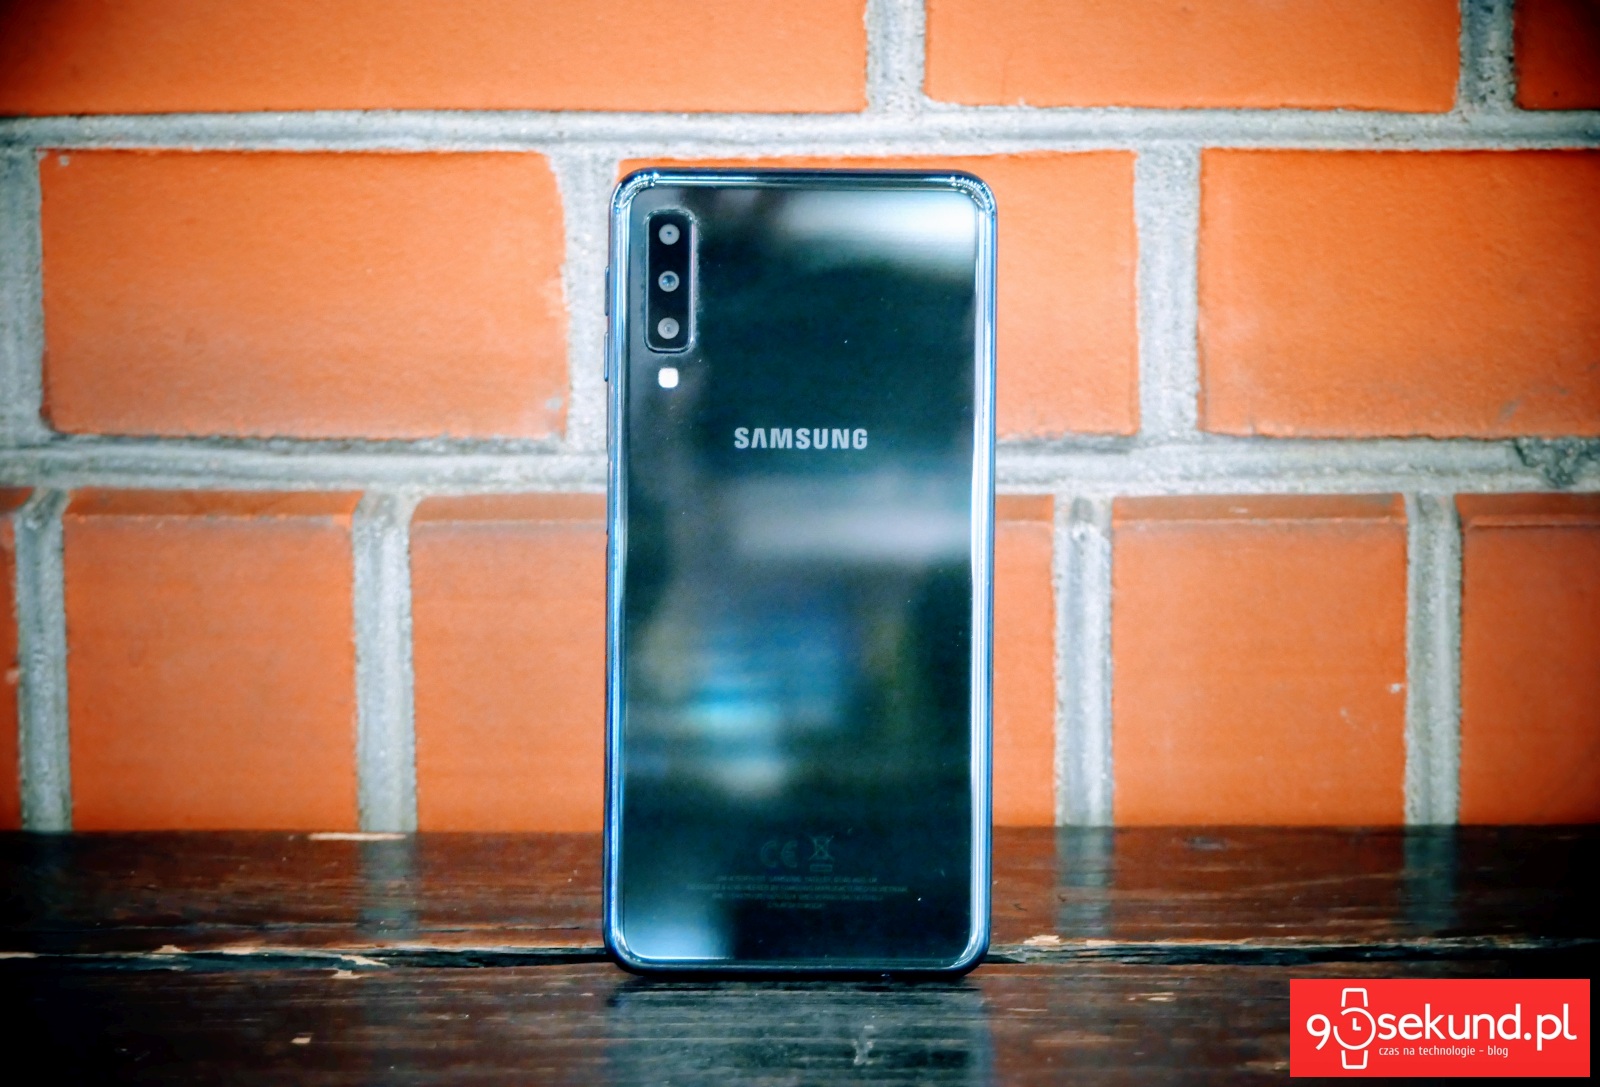 Recenzja Samsung Galaxy A7 2018 - Michał Brożyński 90sekund.pl